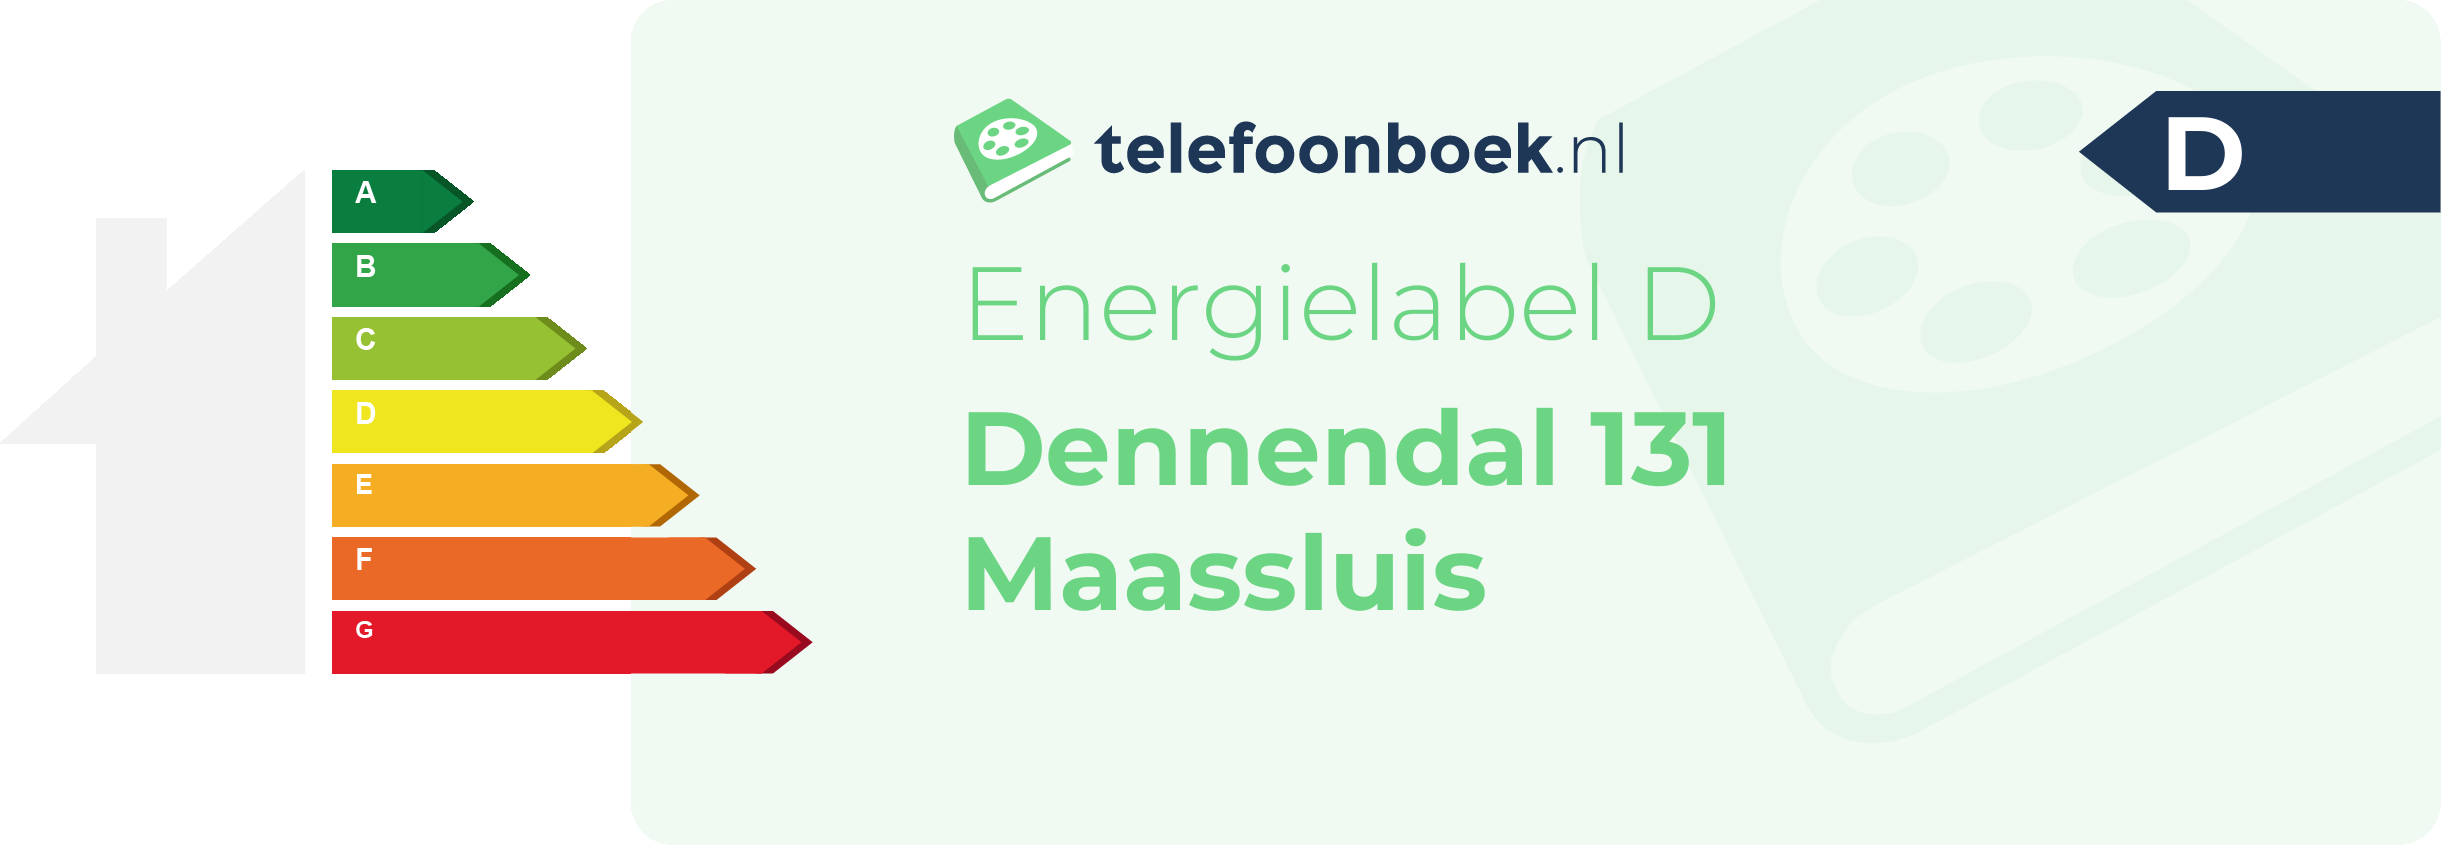 Energielabel Dennendal 131 Maassluis